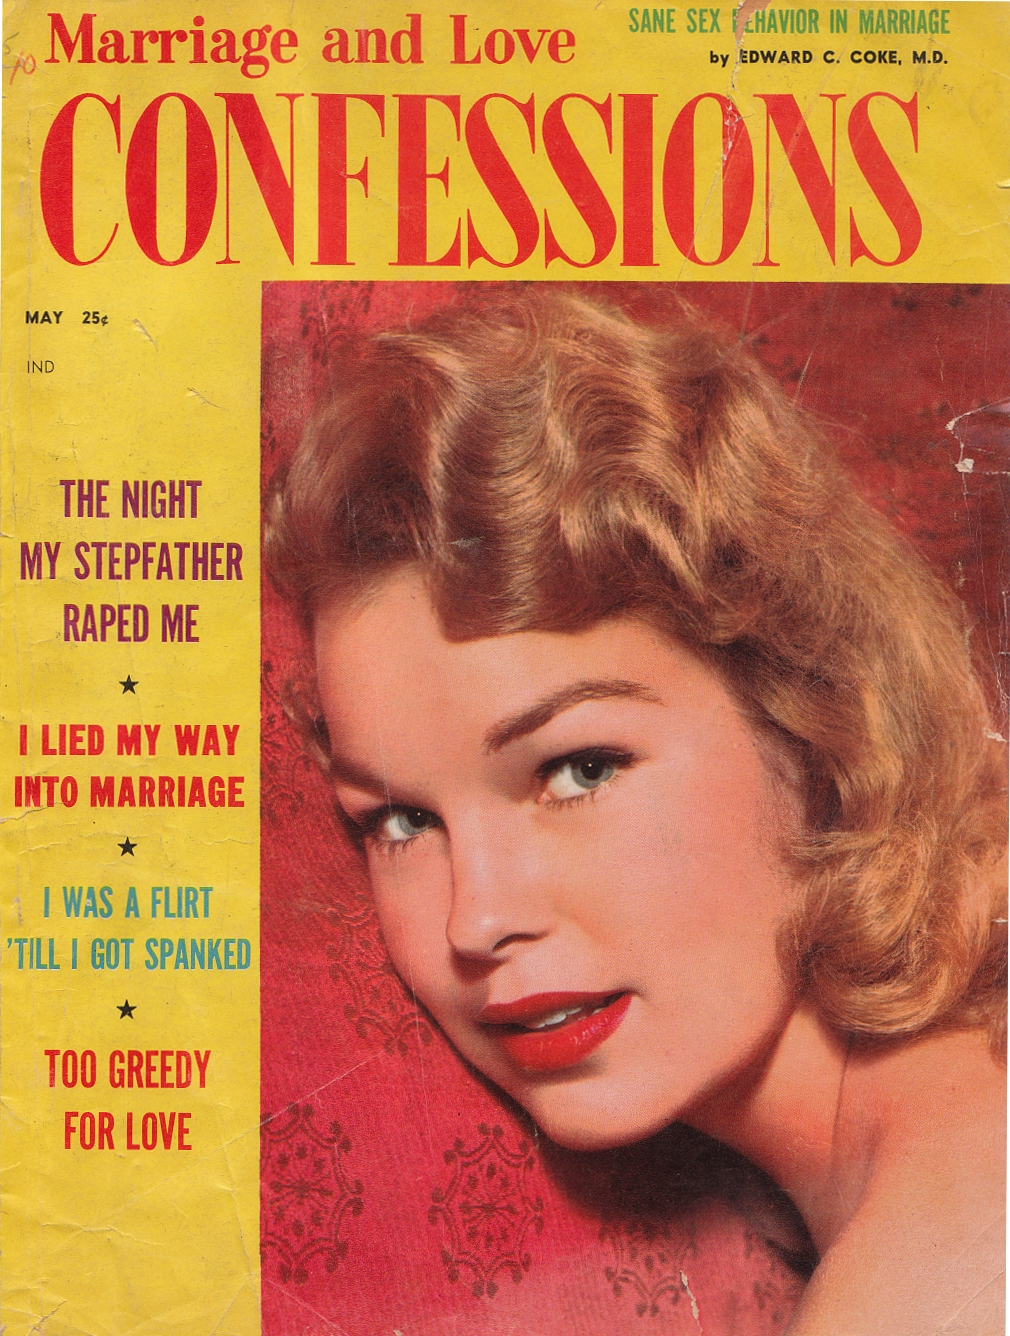 Marriage and Love Confessions 1958/5 ELLEN STRATTON COVER